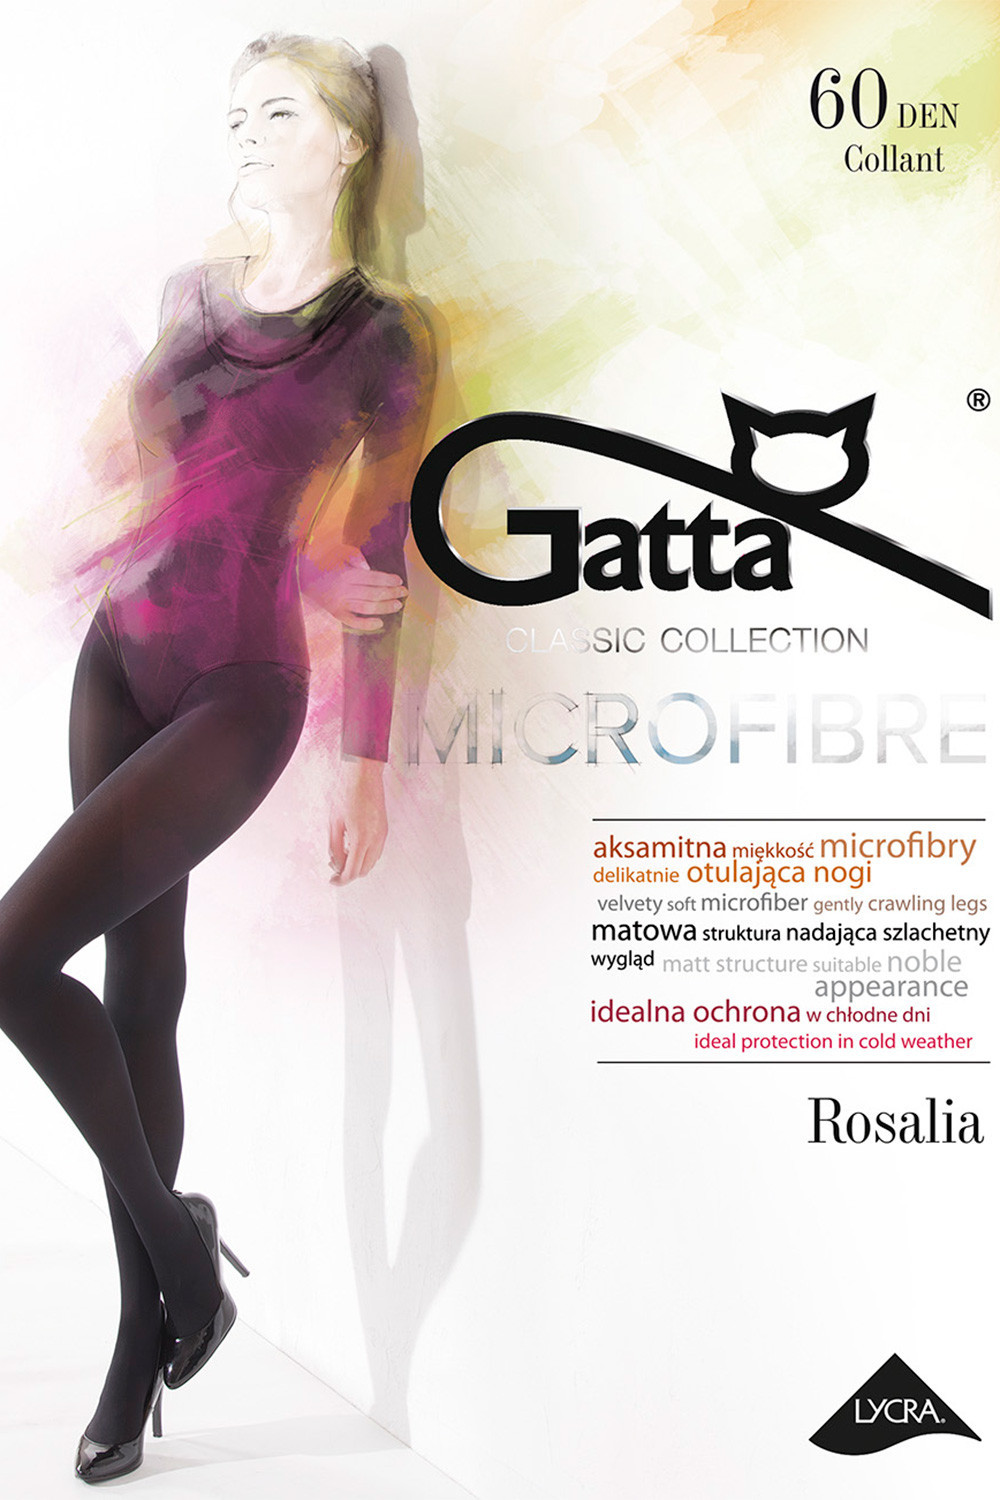 Gatta Rosalia 60 kolor:nero 4-L